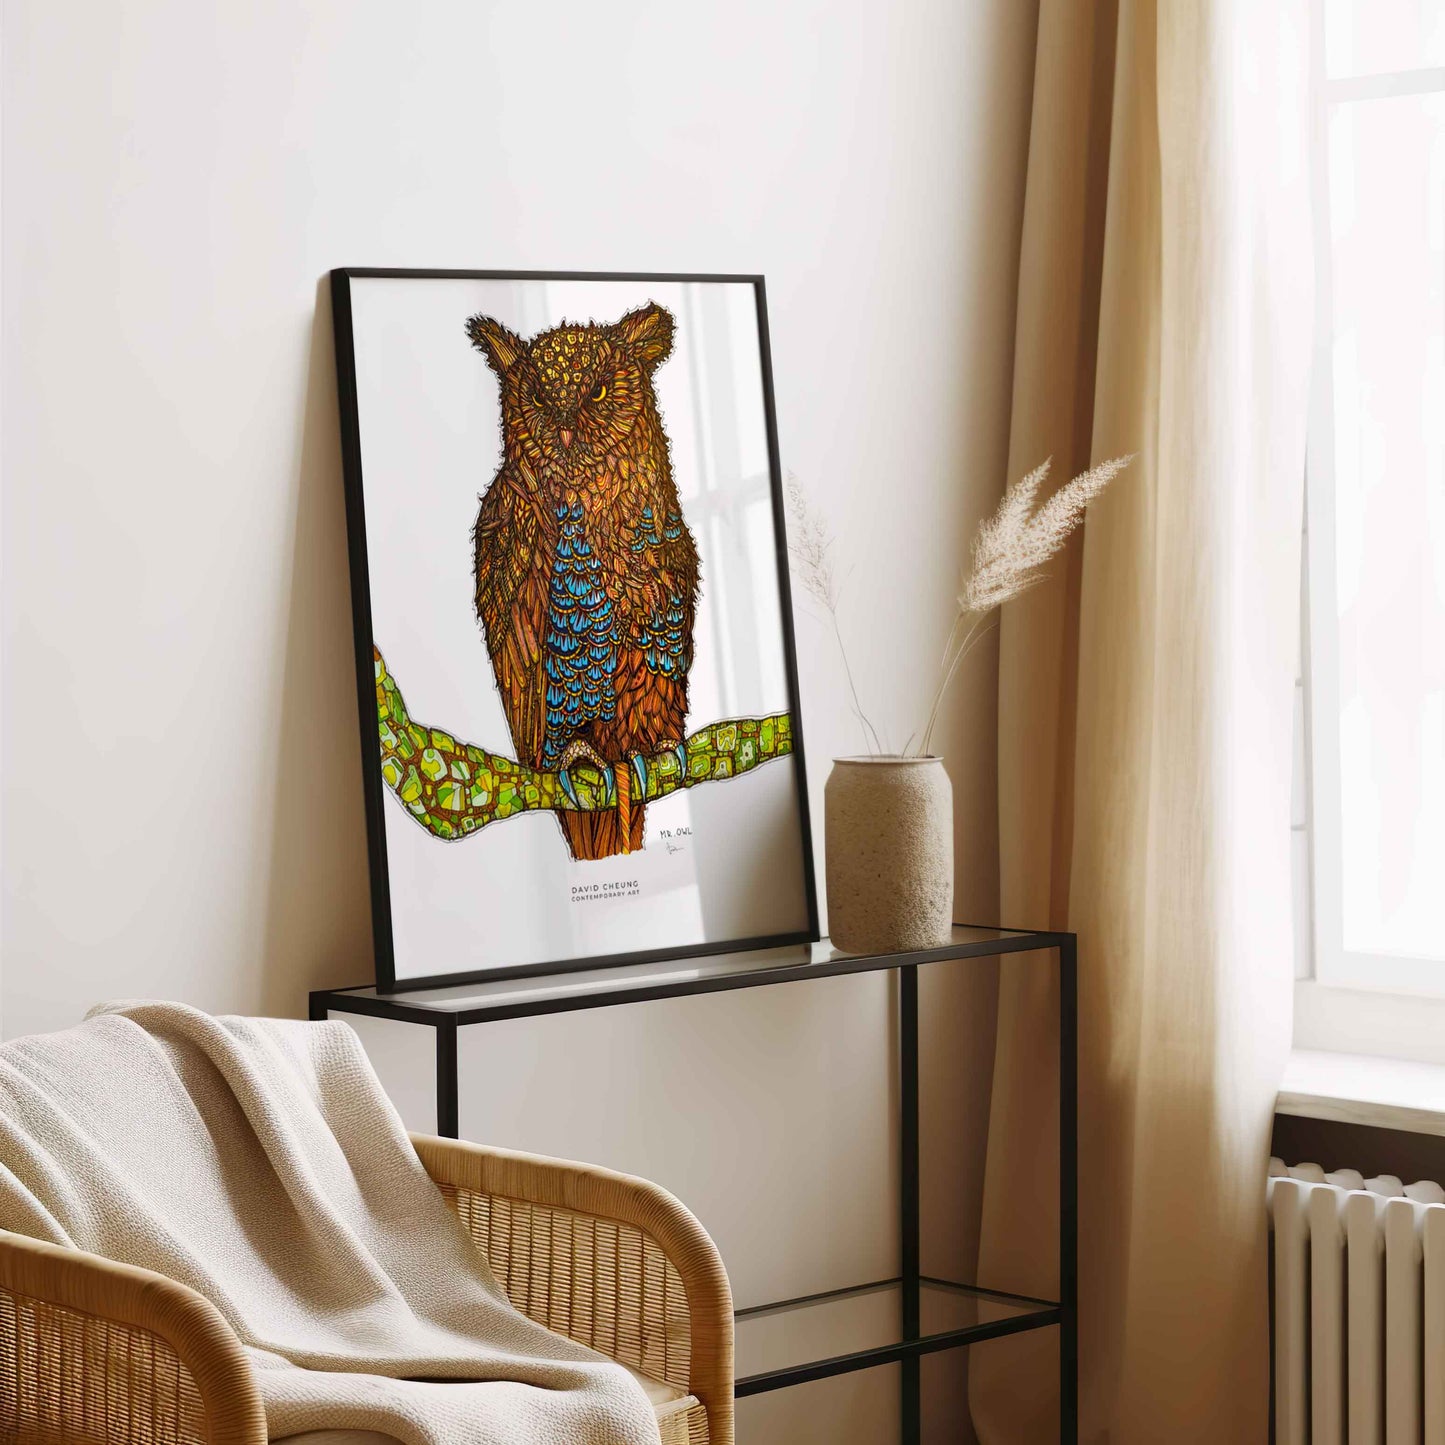 Art print "Mr Owl"